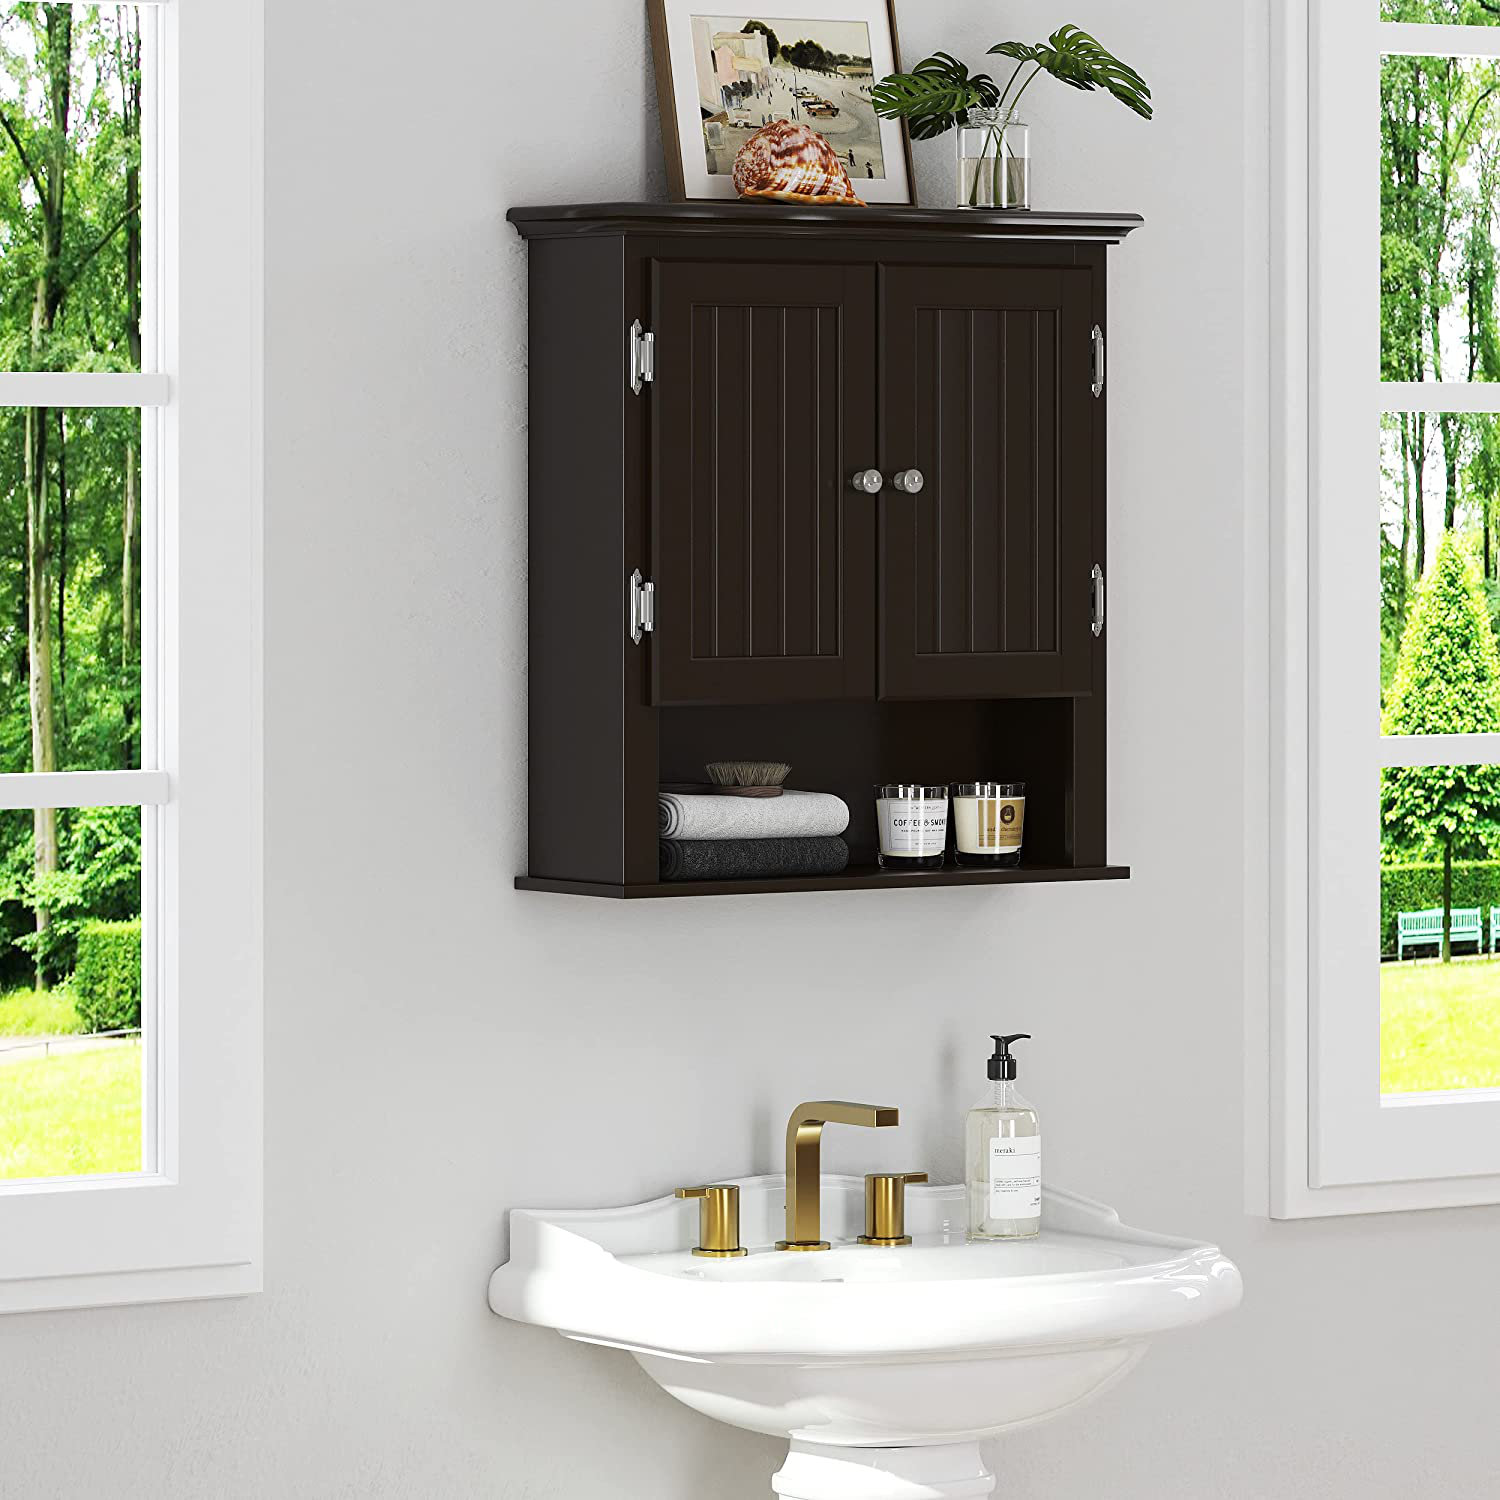 Lavish Home Wall-Mounted Bathroom Organizer - Medicine Cabinet or